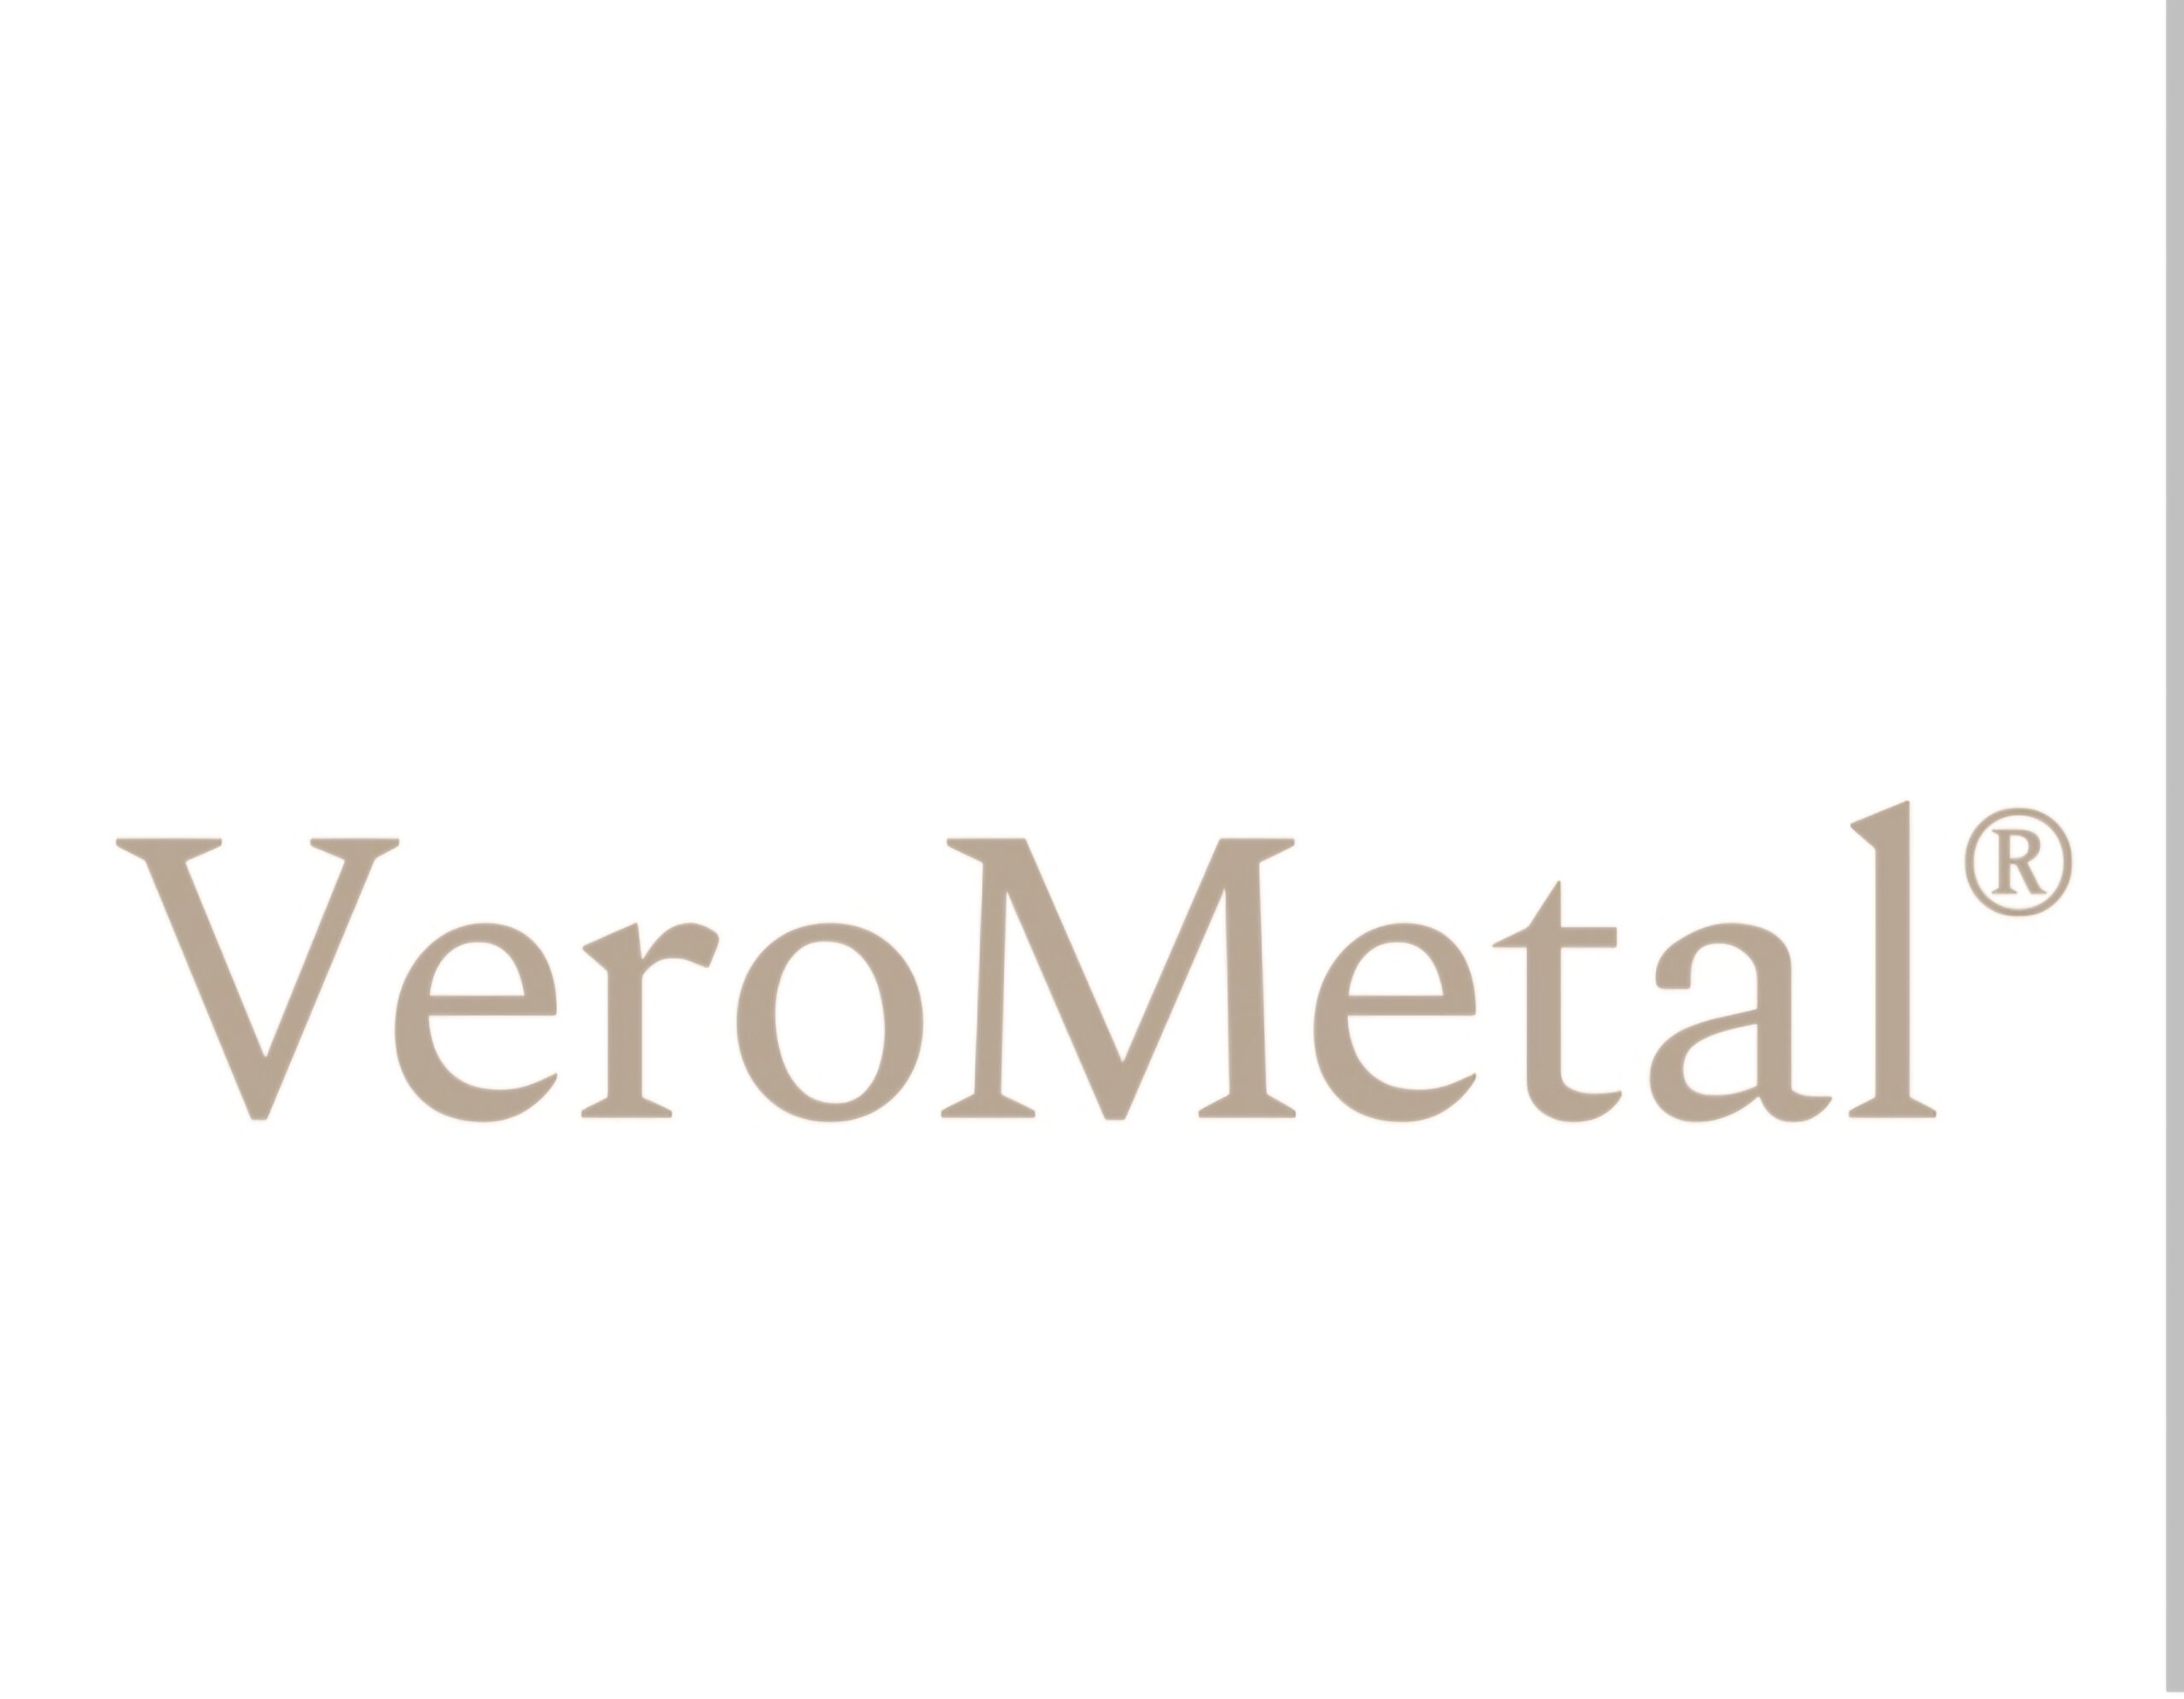 Verometal logo